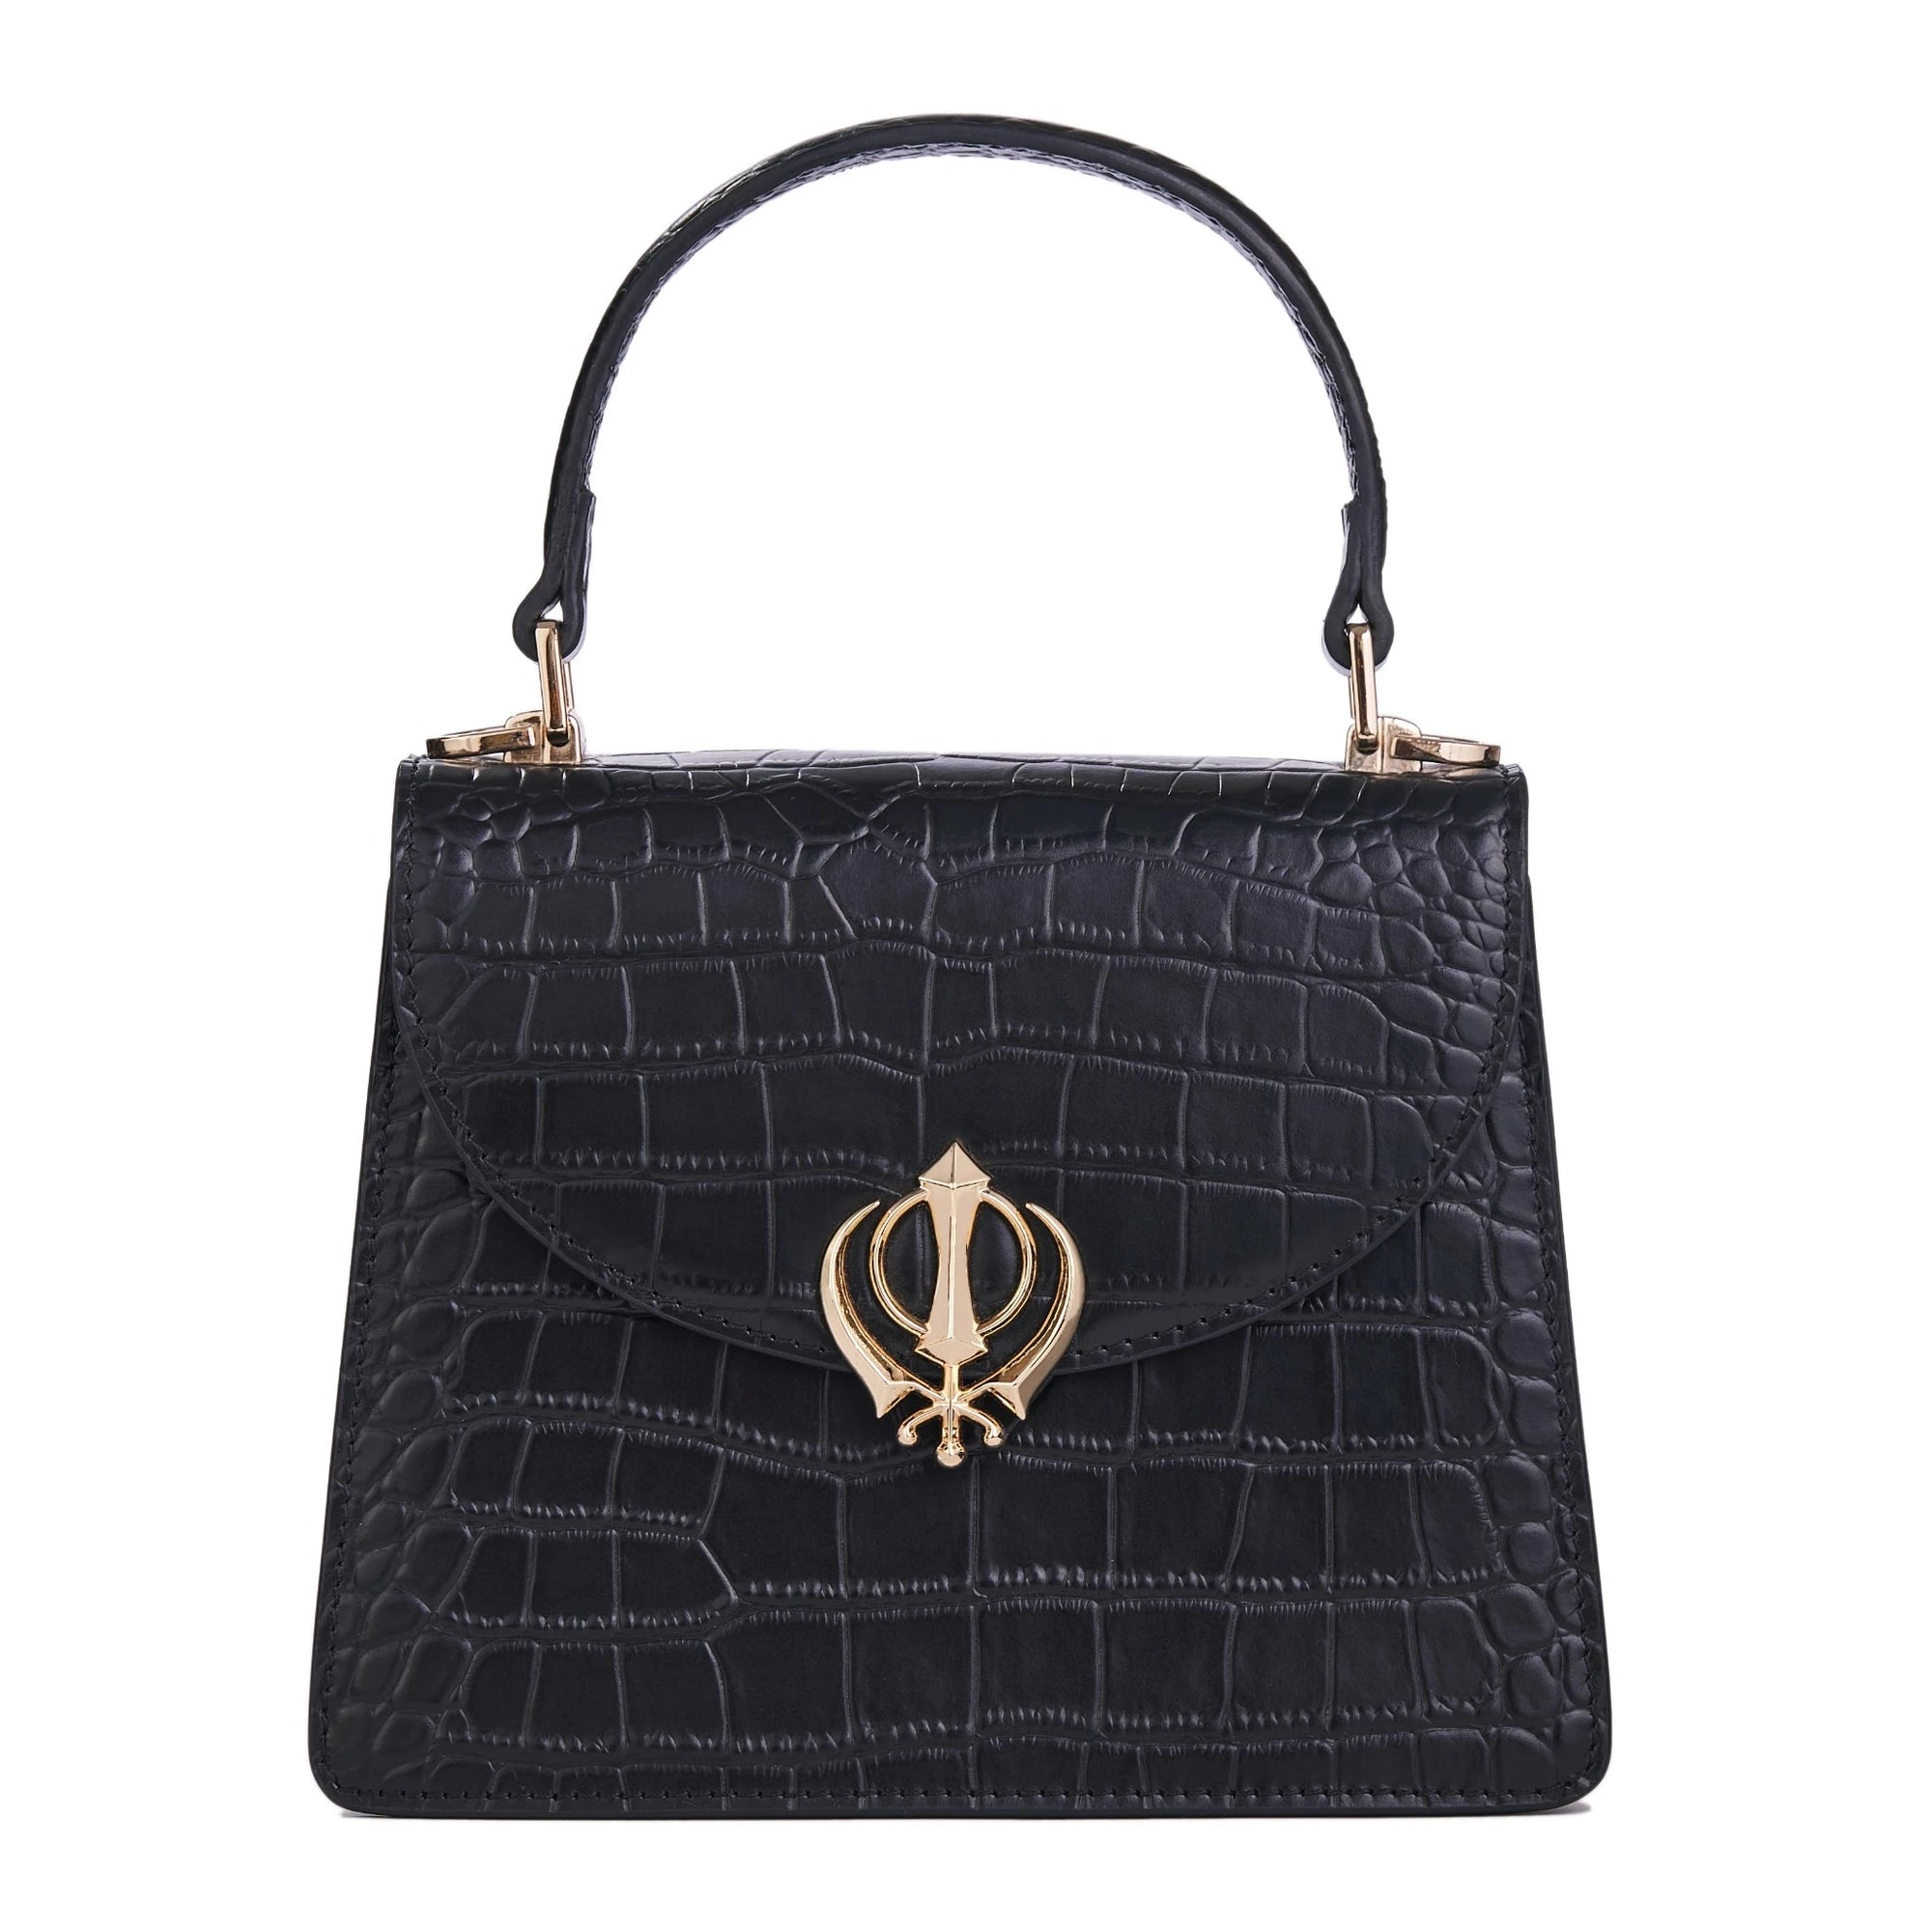 House of Khalsa Black Leather Handbag Punjabi Heritage